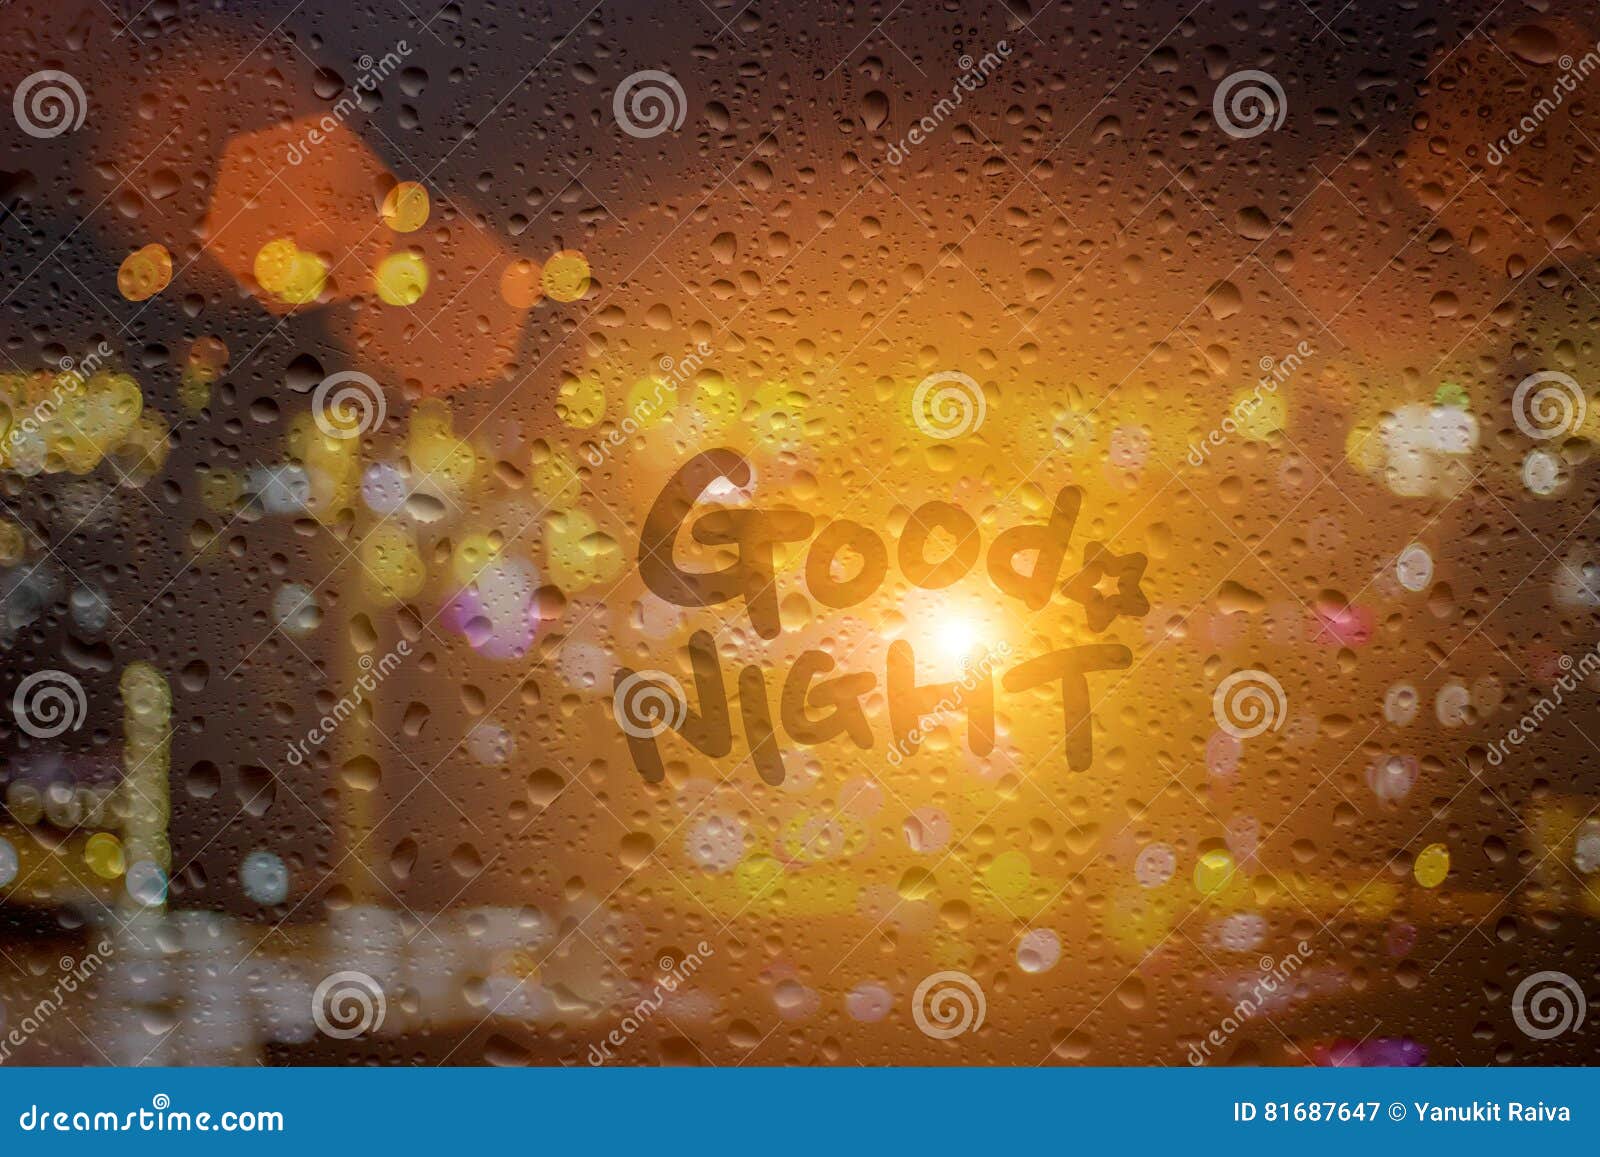 Draw good night on window stock image. Image of good - 81687647